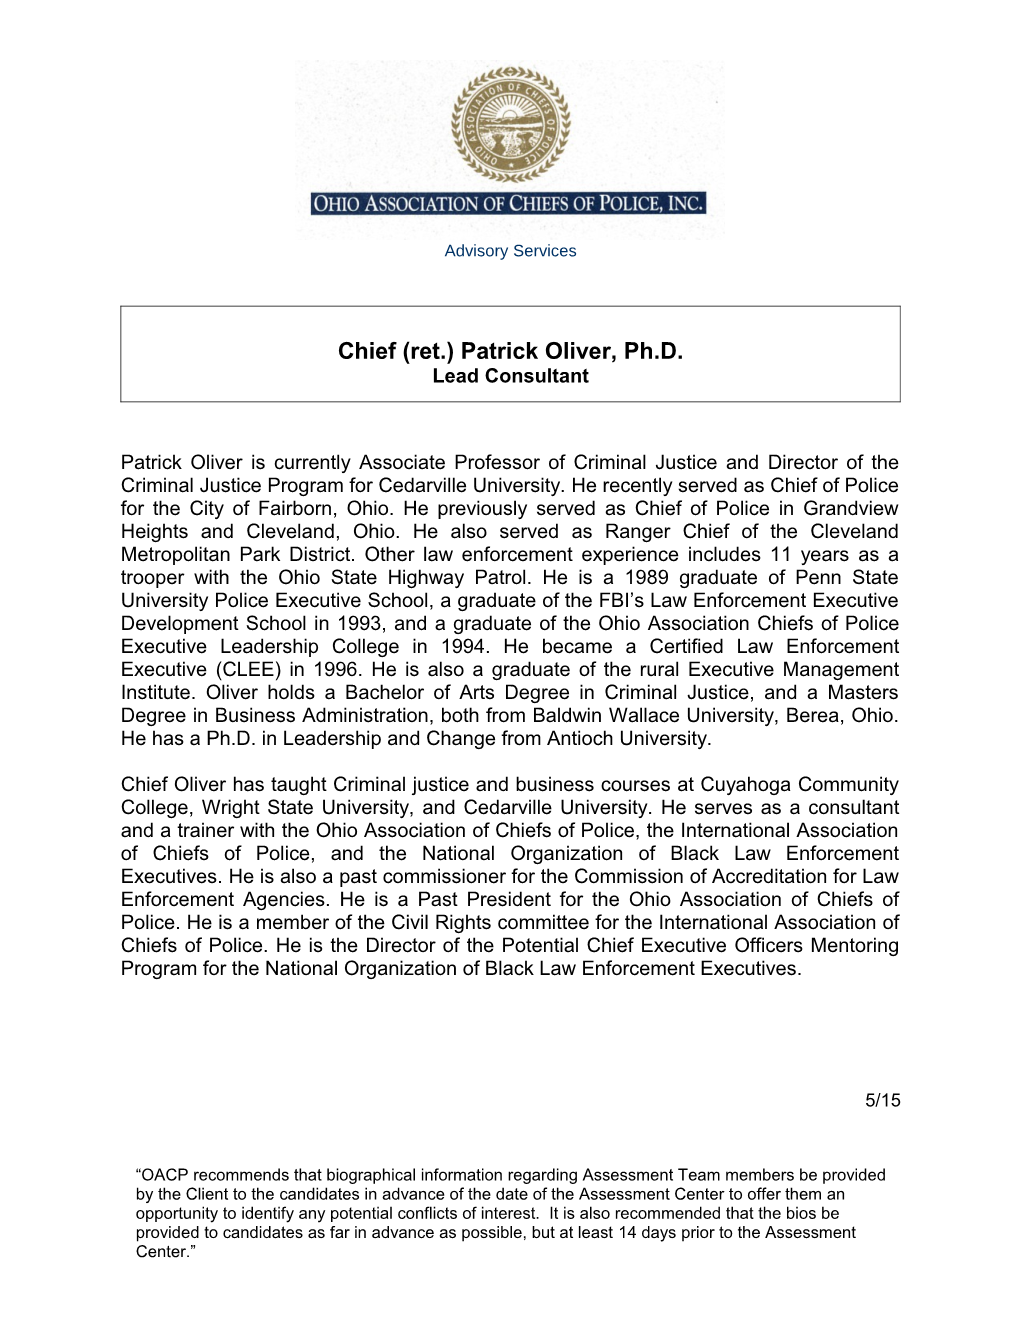 Chief (Ret.) Patrick Oliver, Ph.D